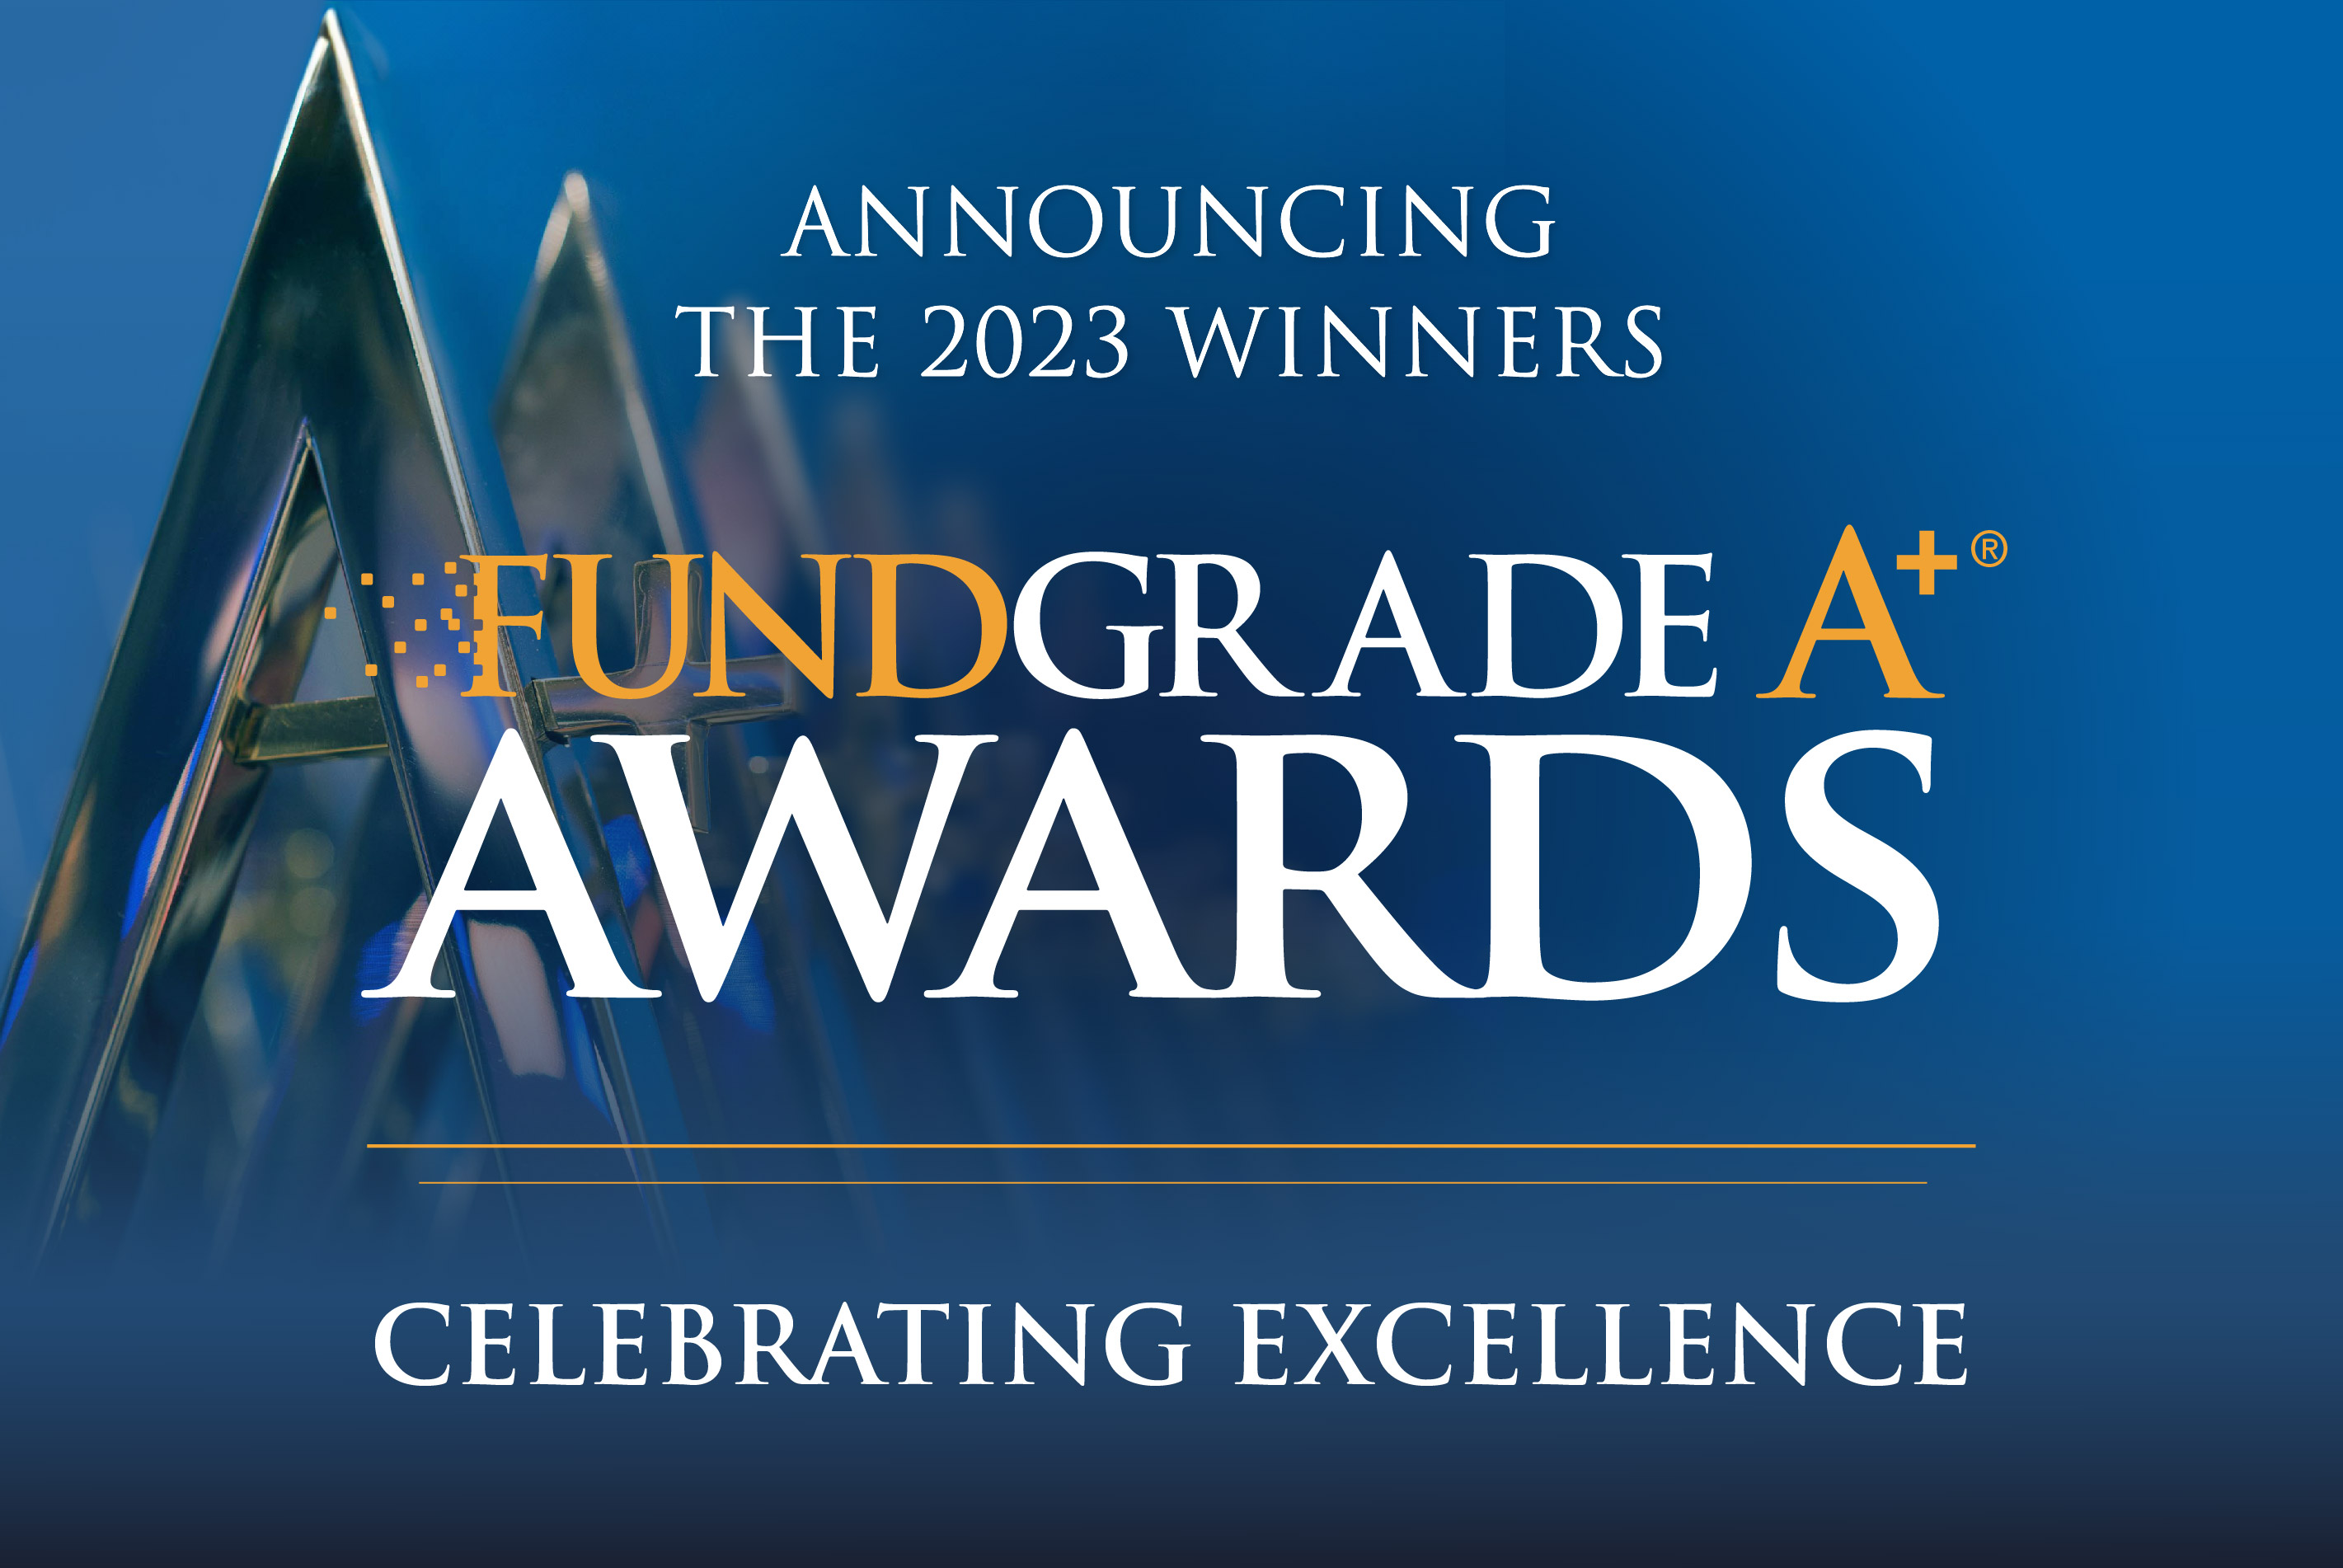 Fundata announces the 2023 FundGrade A+® Award winners